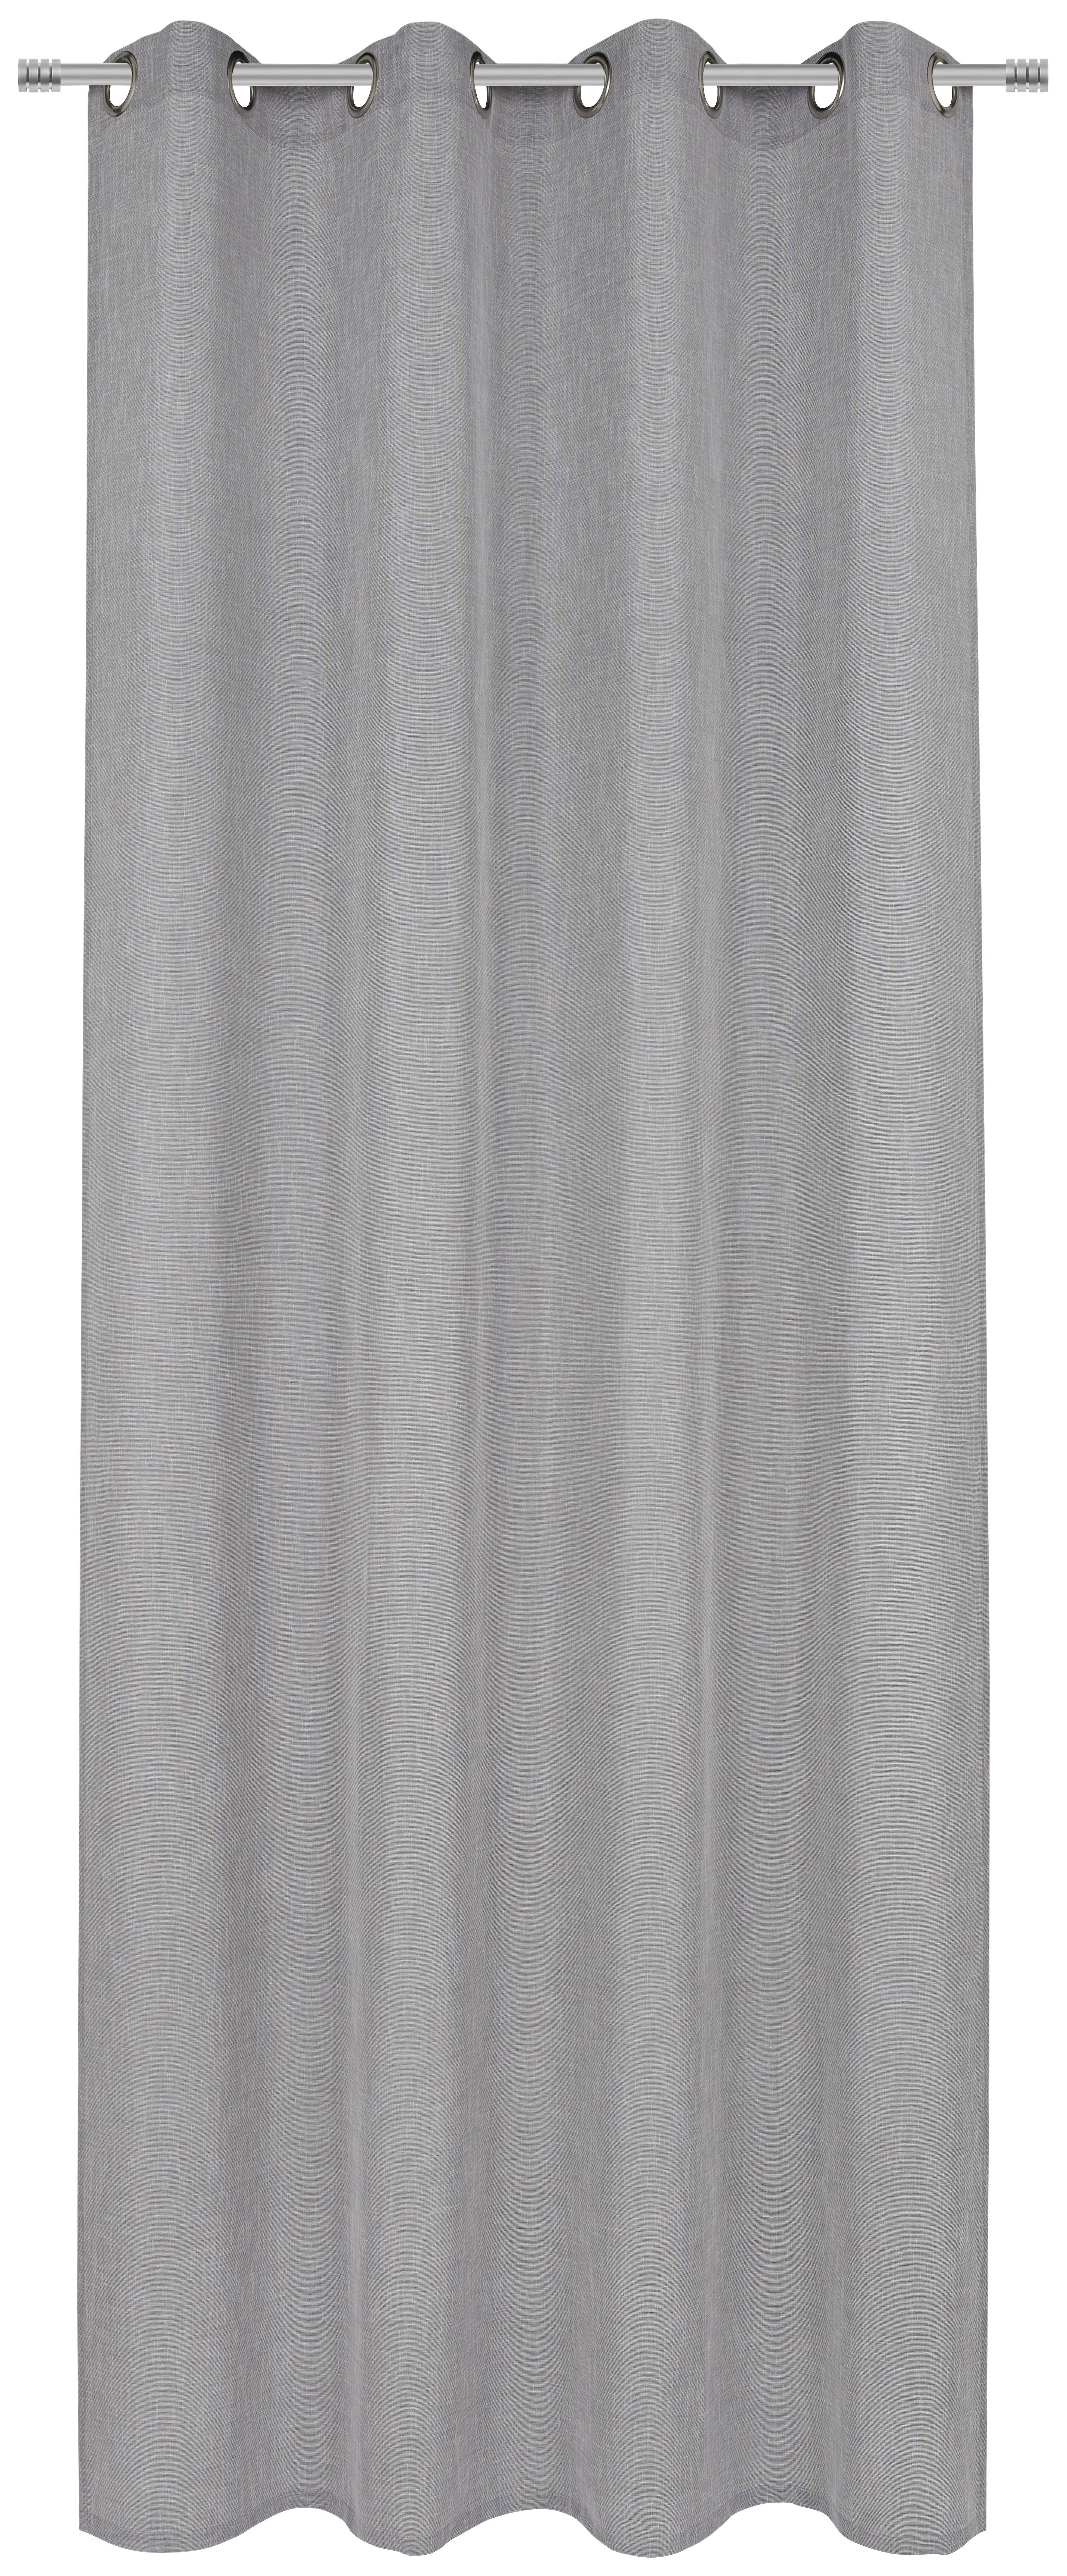 ÖSENSCHAL RIOSTA blickdicht 140/245 cm   - Anthrazit, Basics, Textil (140/245cm) - Esposa